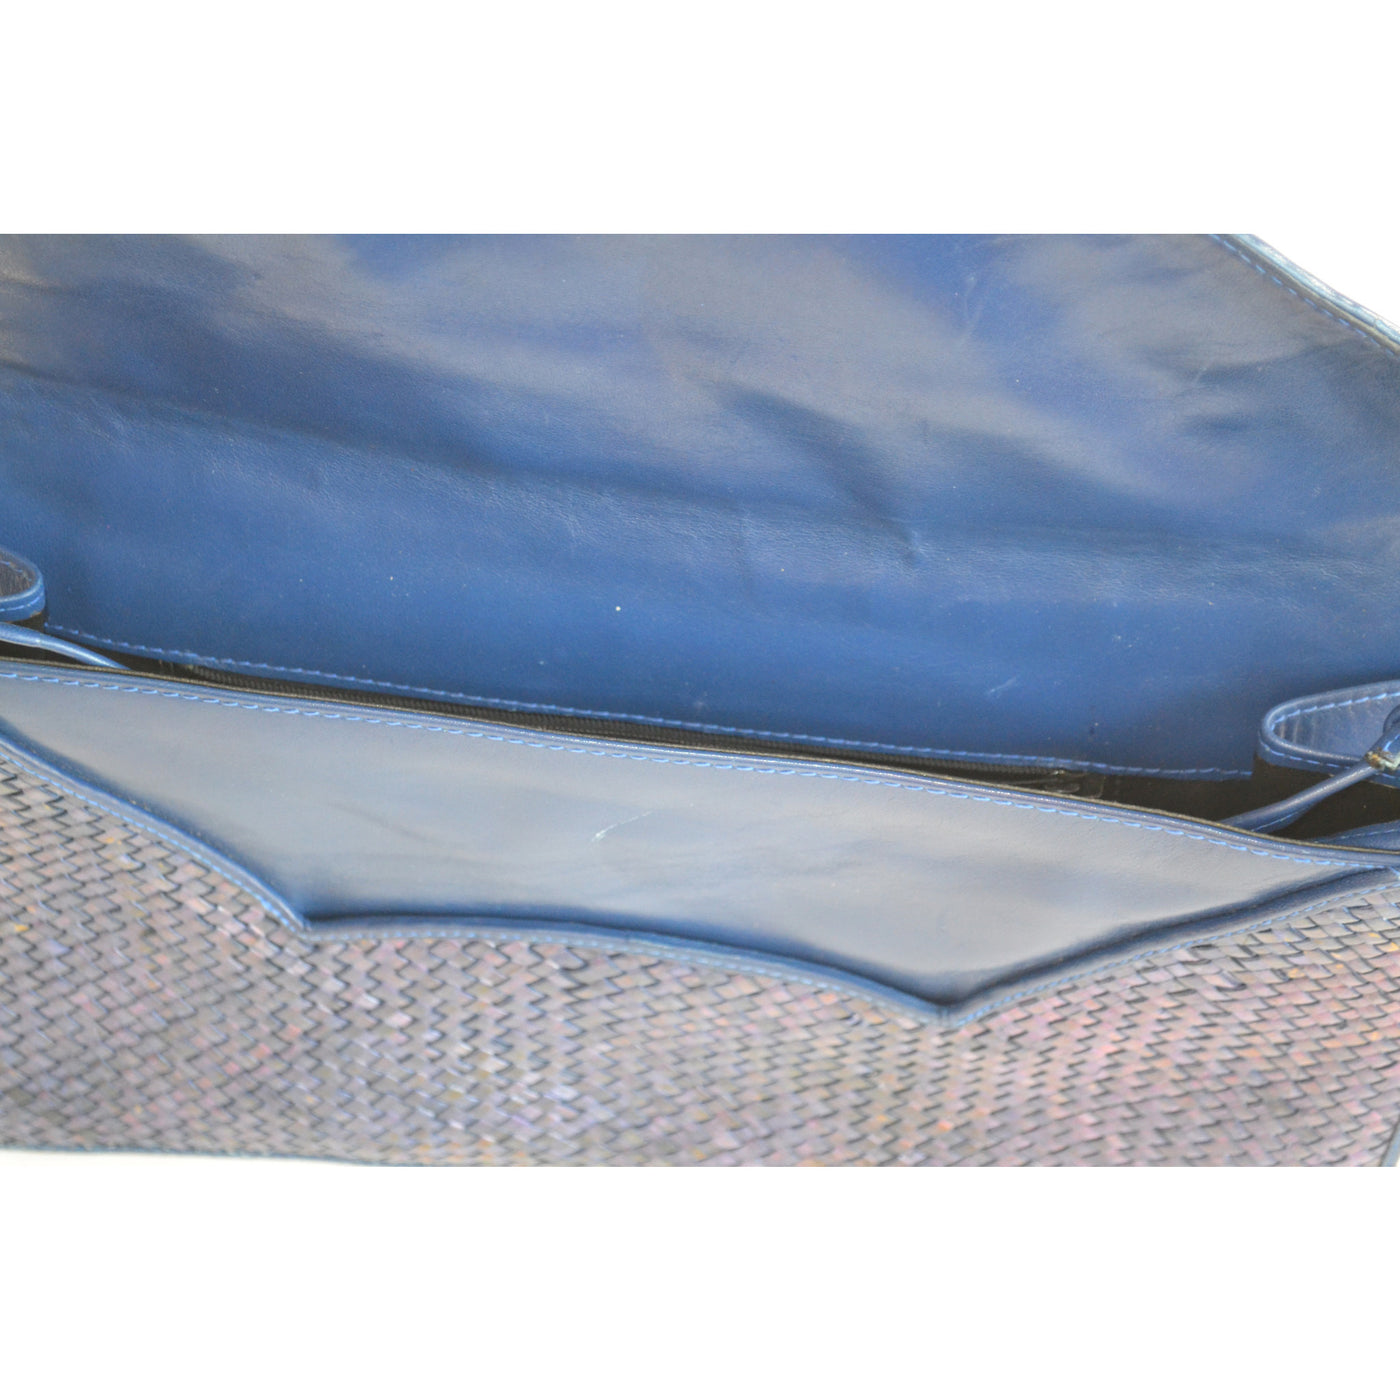 Vintage Blue Wicker & Leather Purse By Susan Gail 